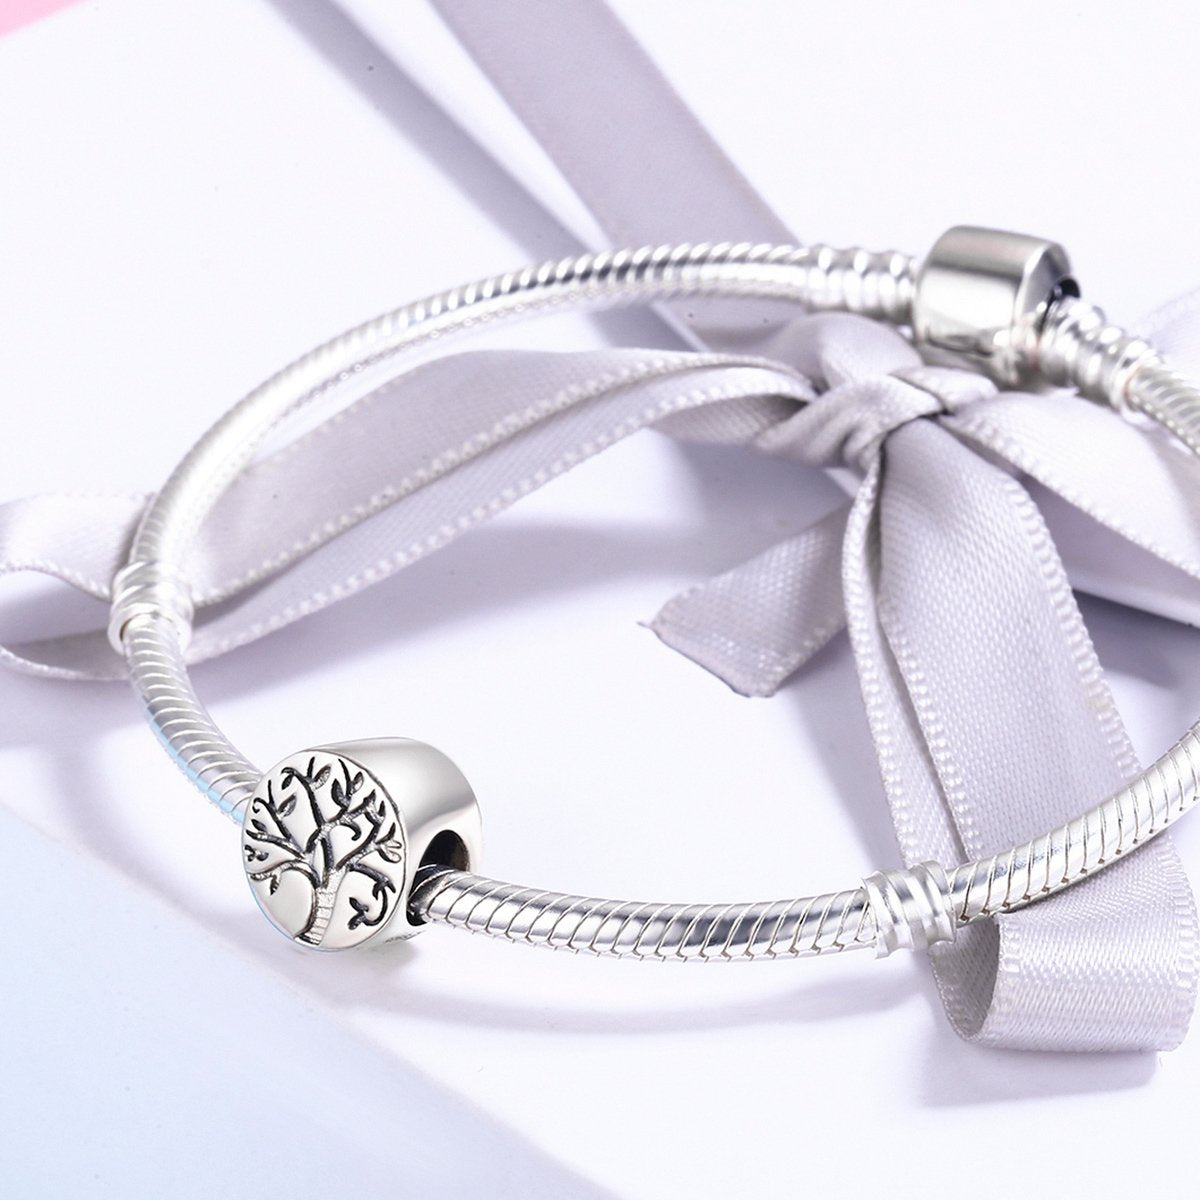 Sterling 925 silver charm the spring tree bead pendant fits Pandora charm and European charm bracelet Xaxe.com